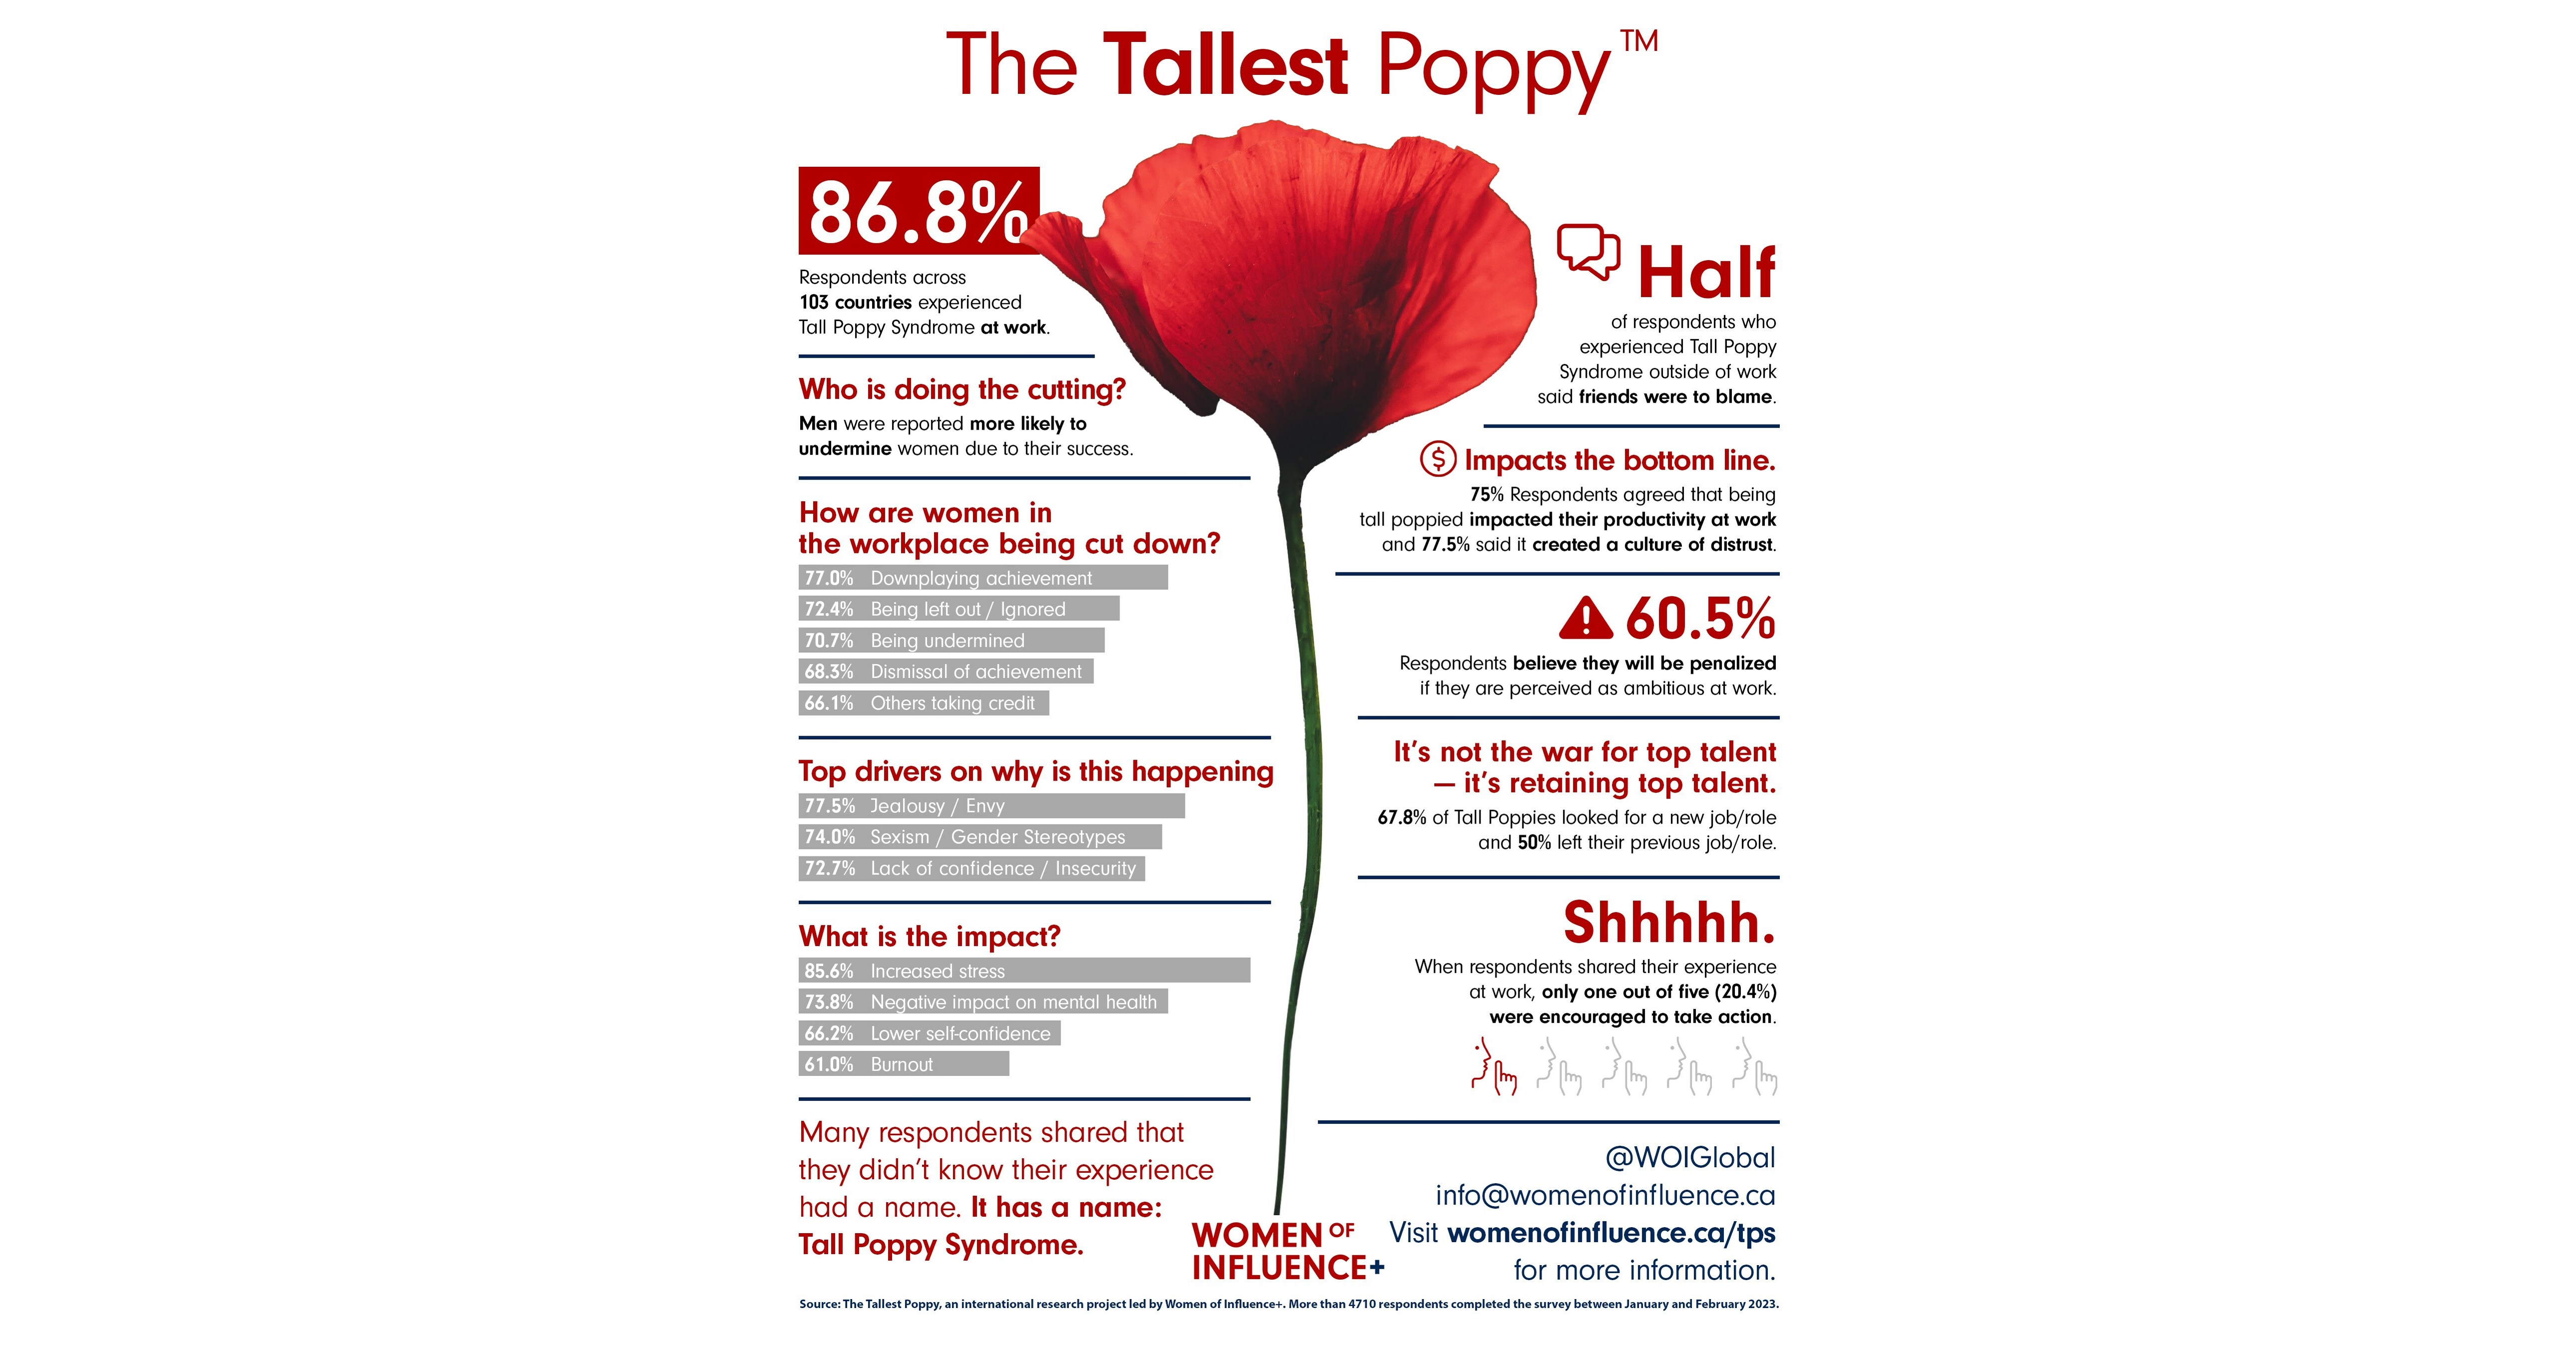 The Tallest Poppy – Women of Influence